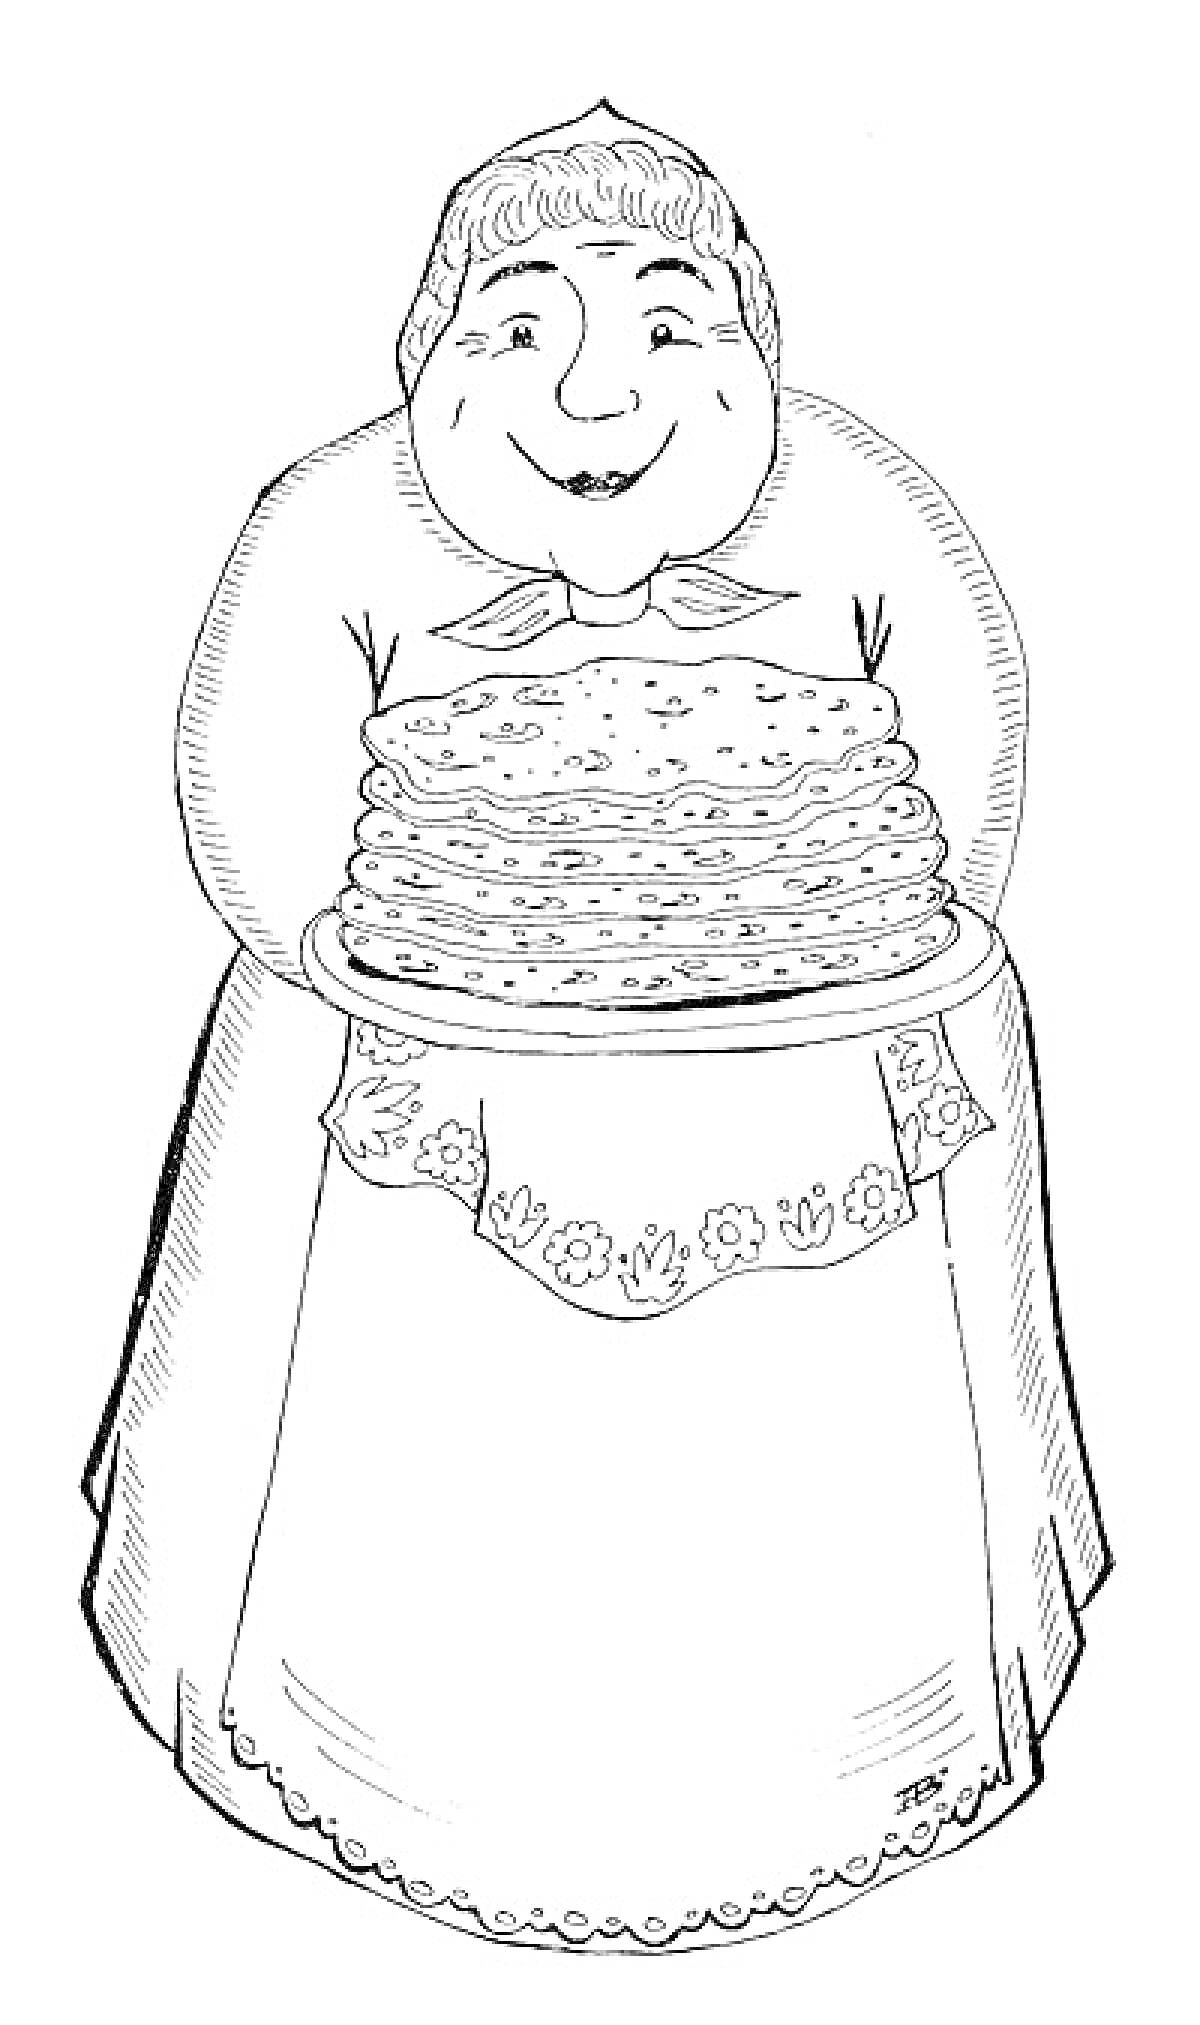 Раскраска Бабушка с блинами на тарелке